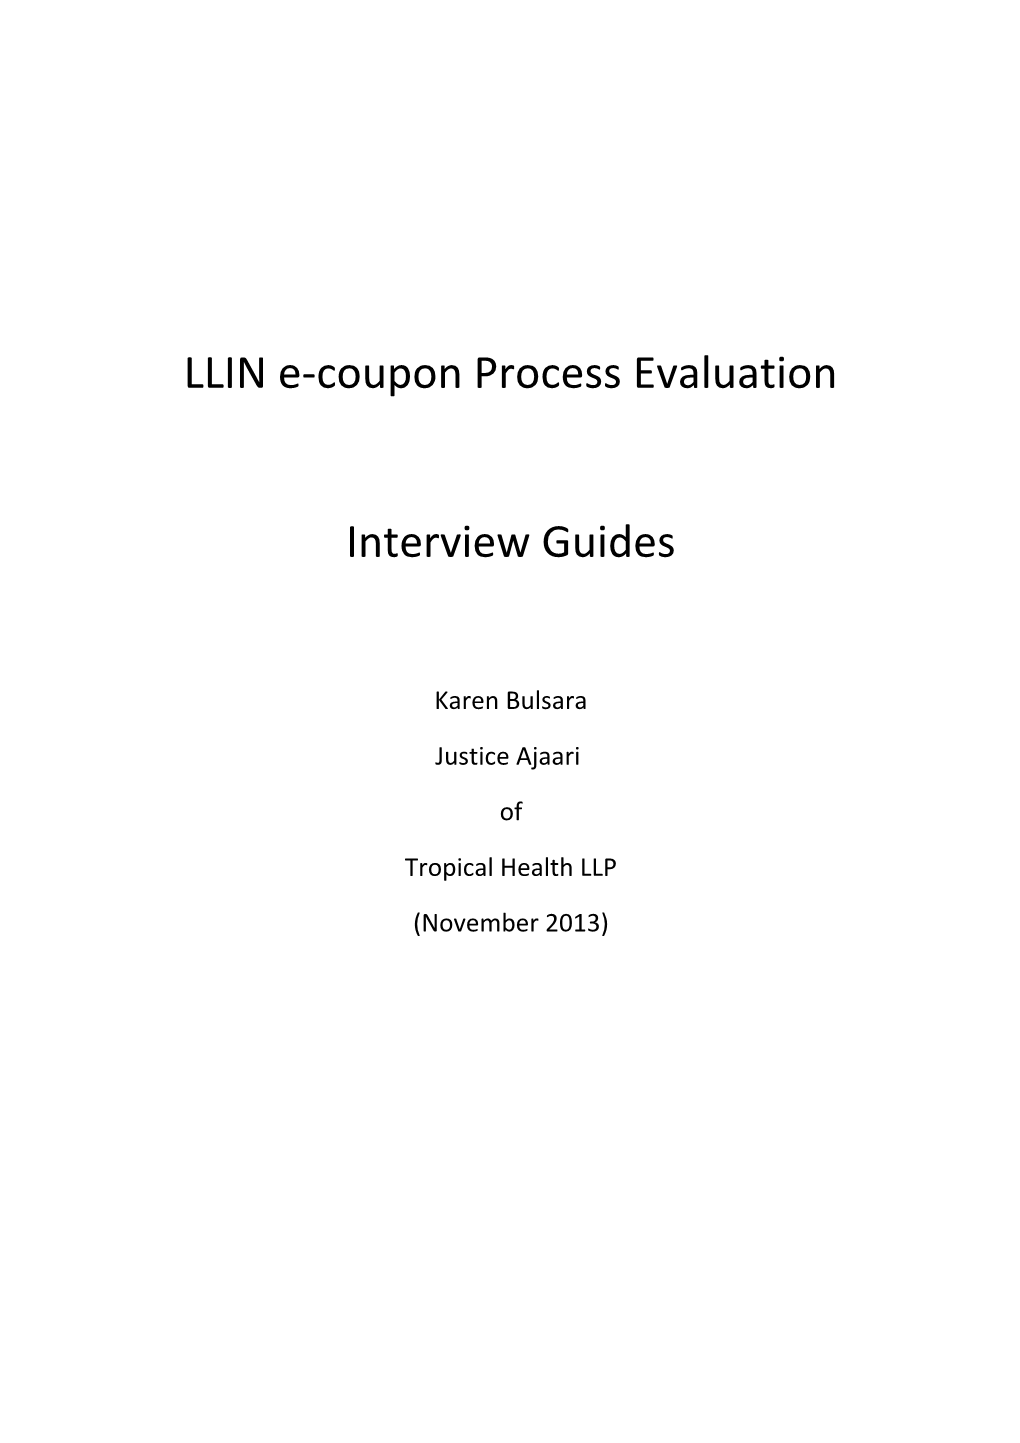 LLIN E-Coupon Process Evaluation